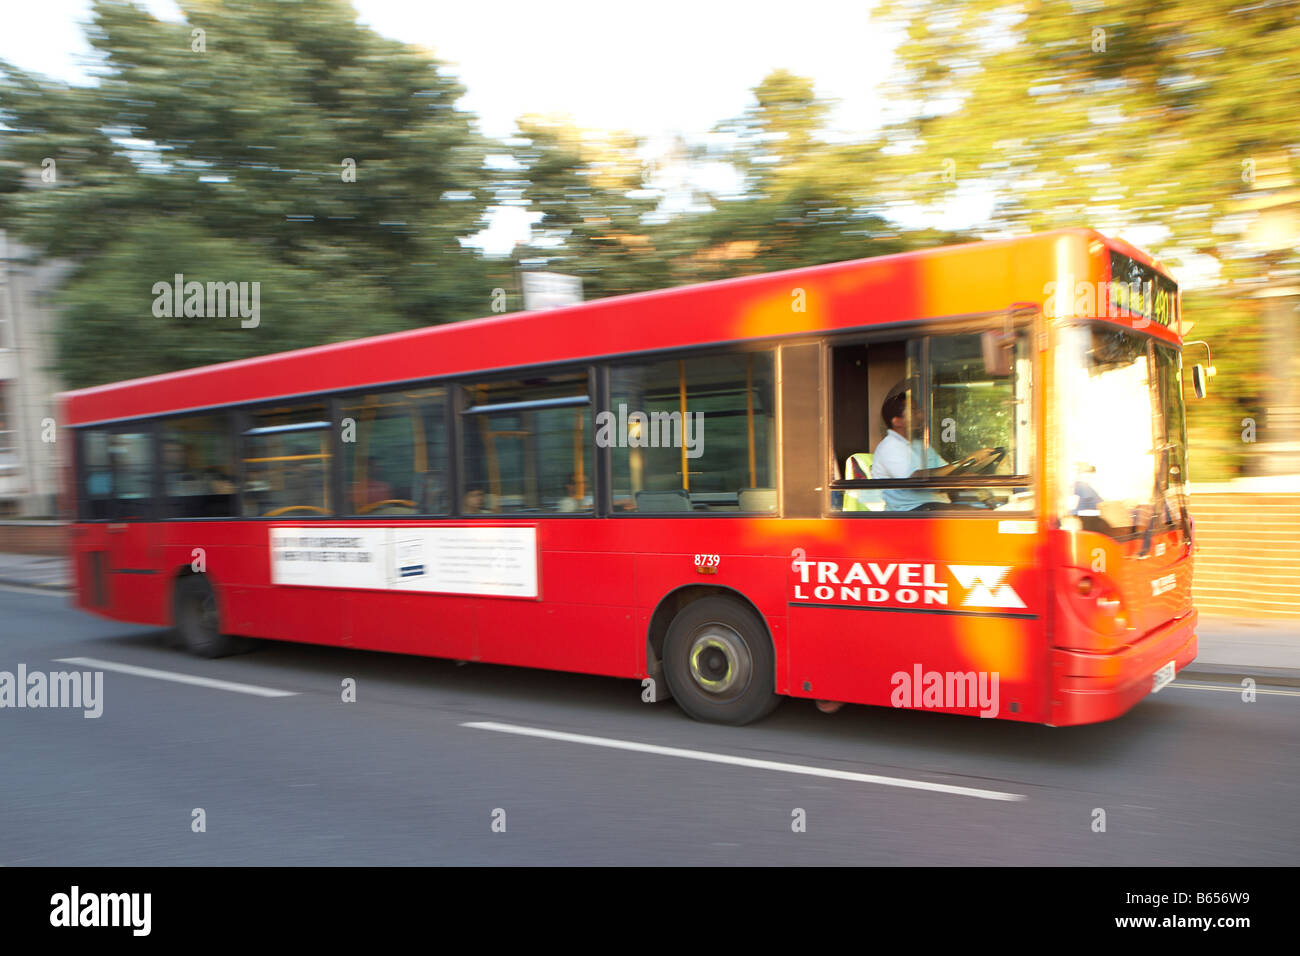 Travel London Bus panning Stock Photo